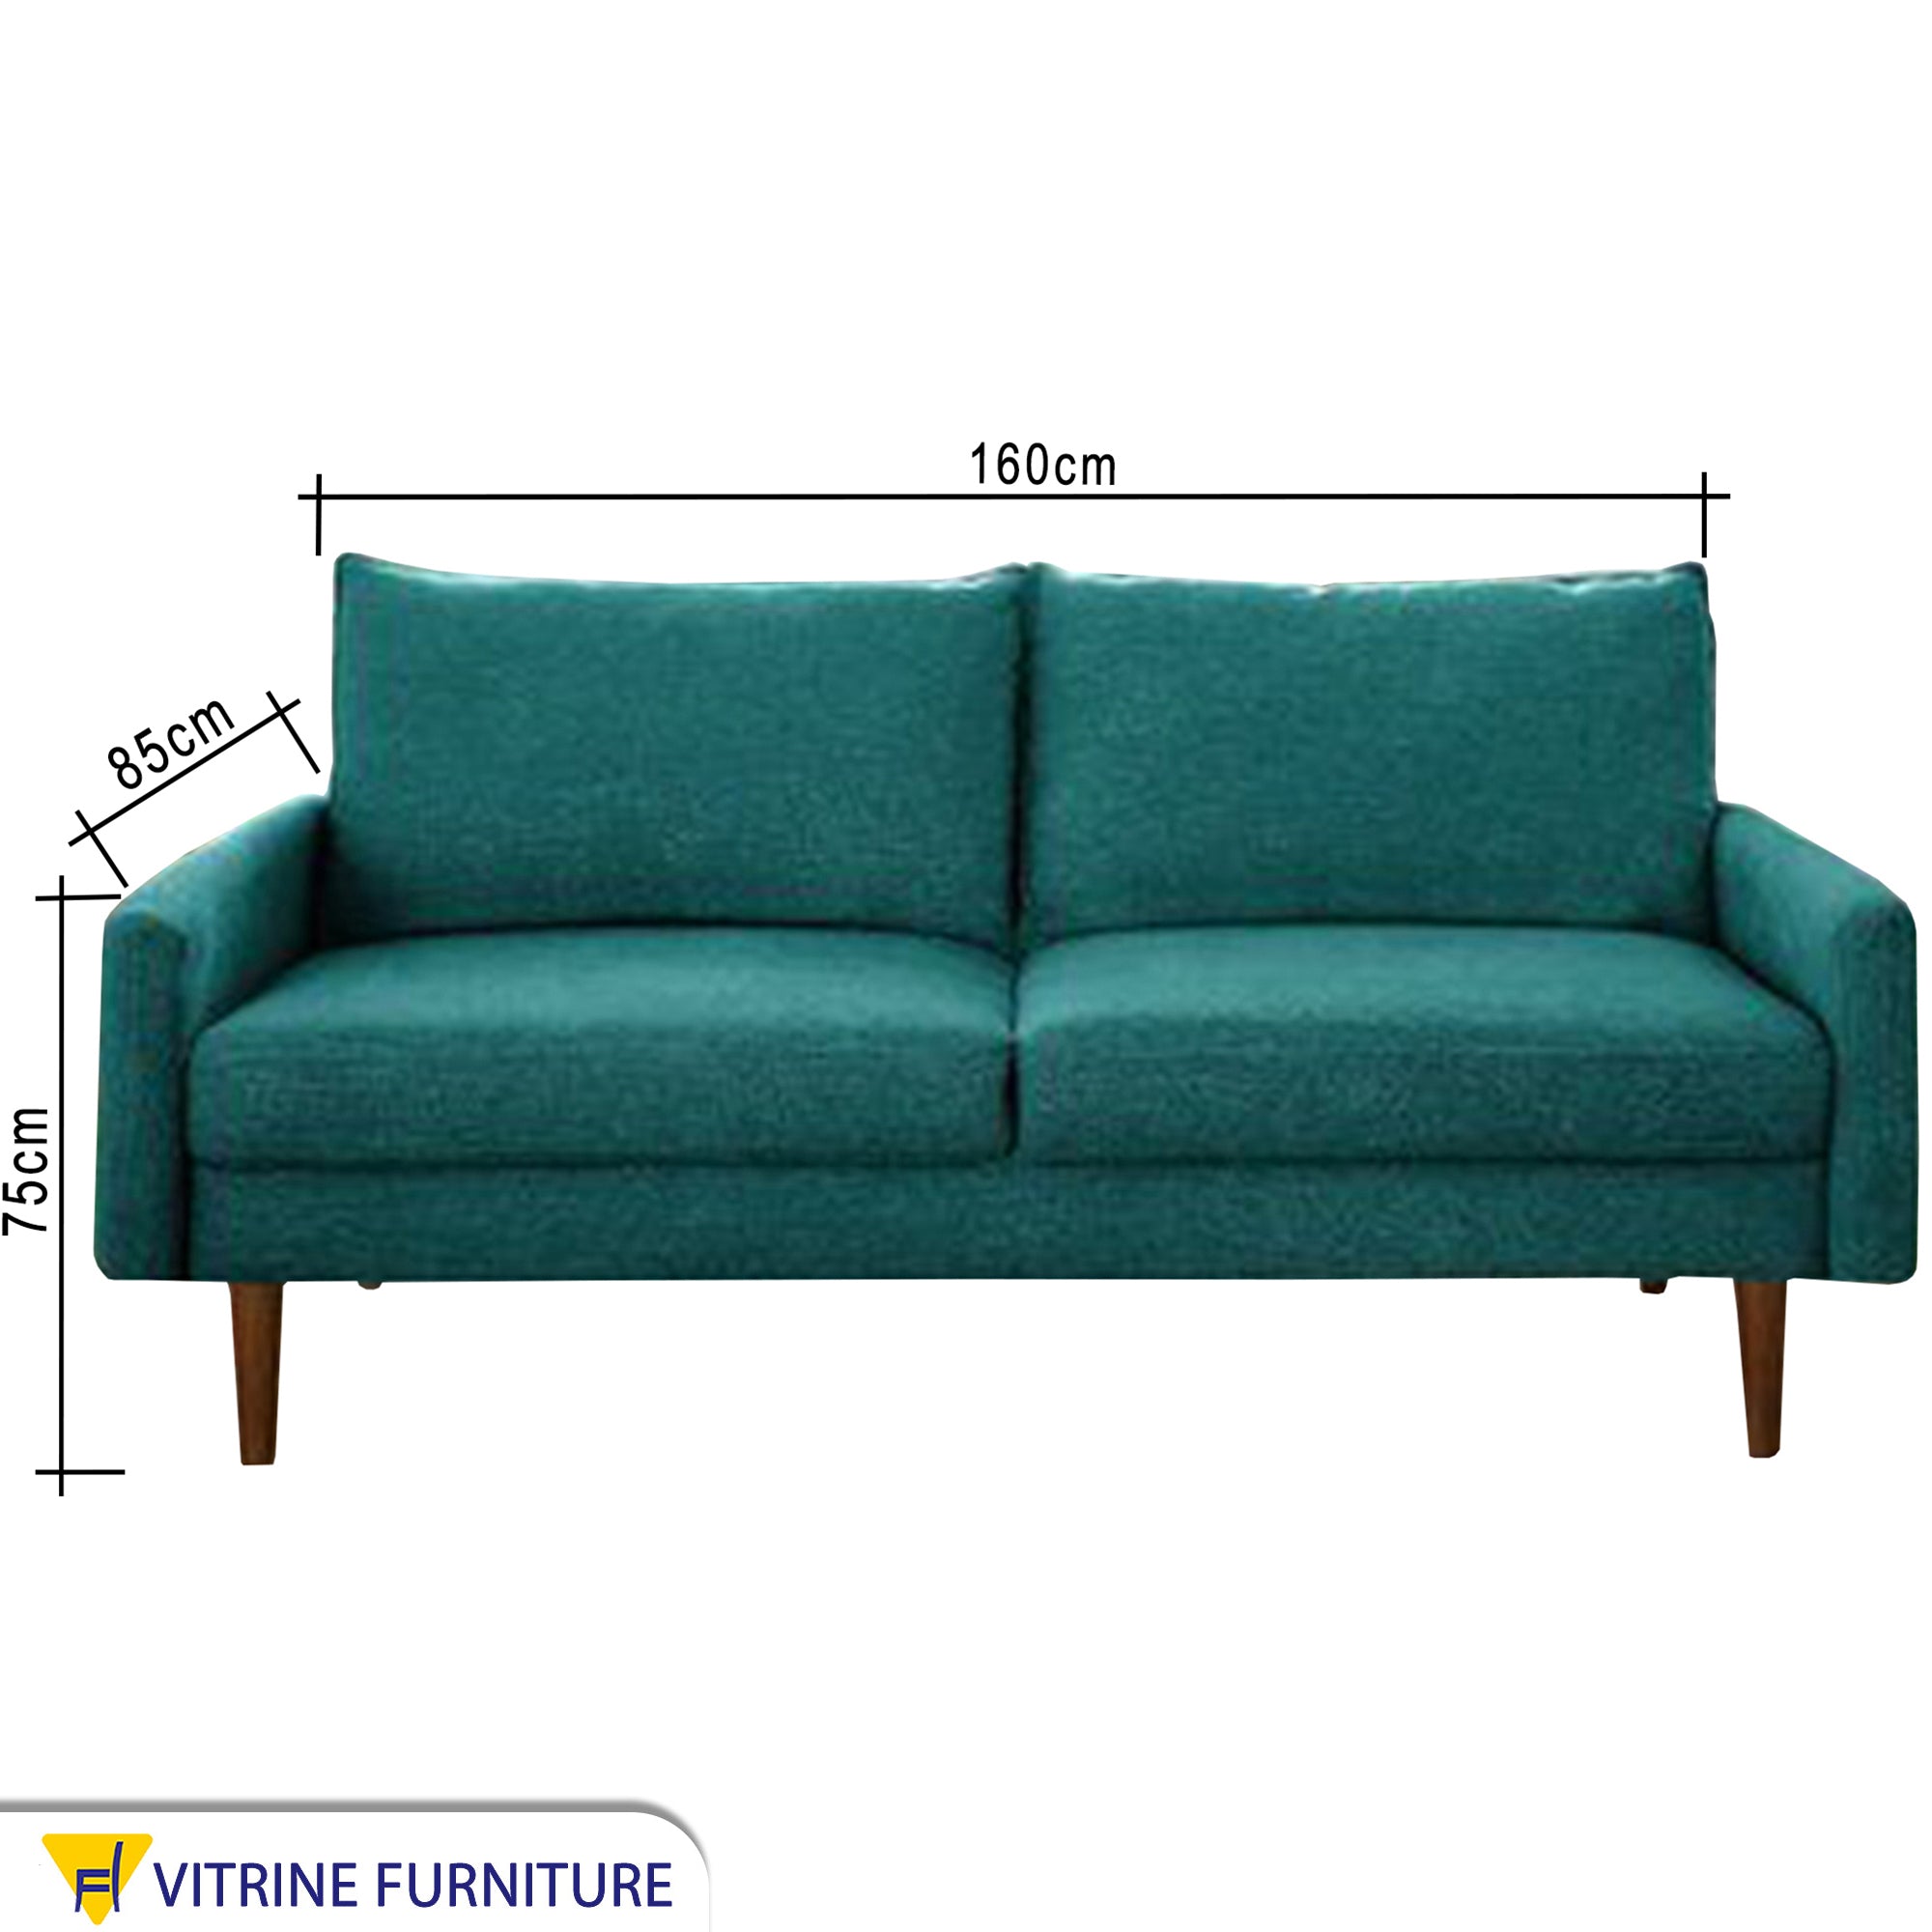 Sofa in green color